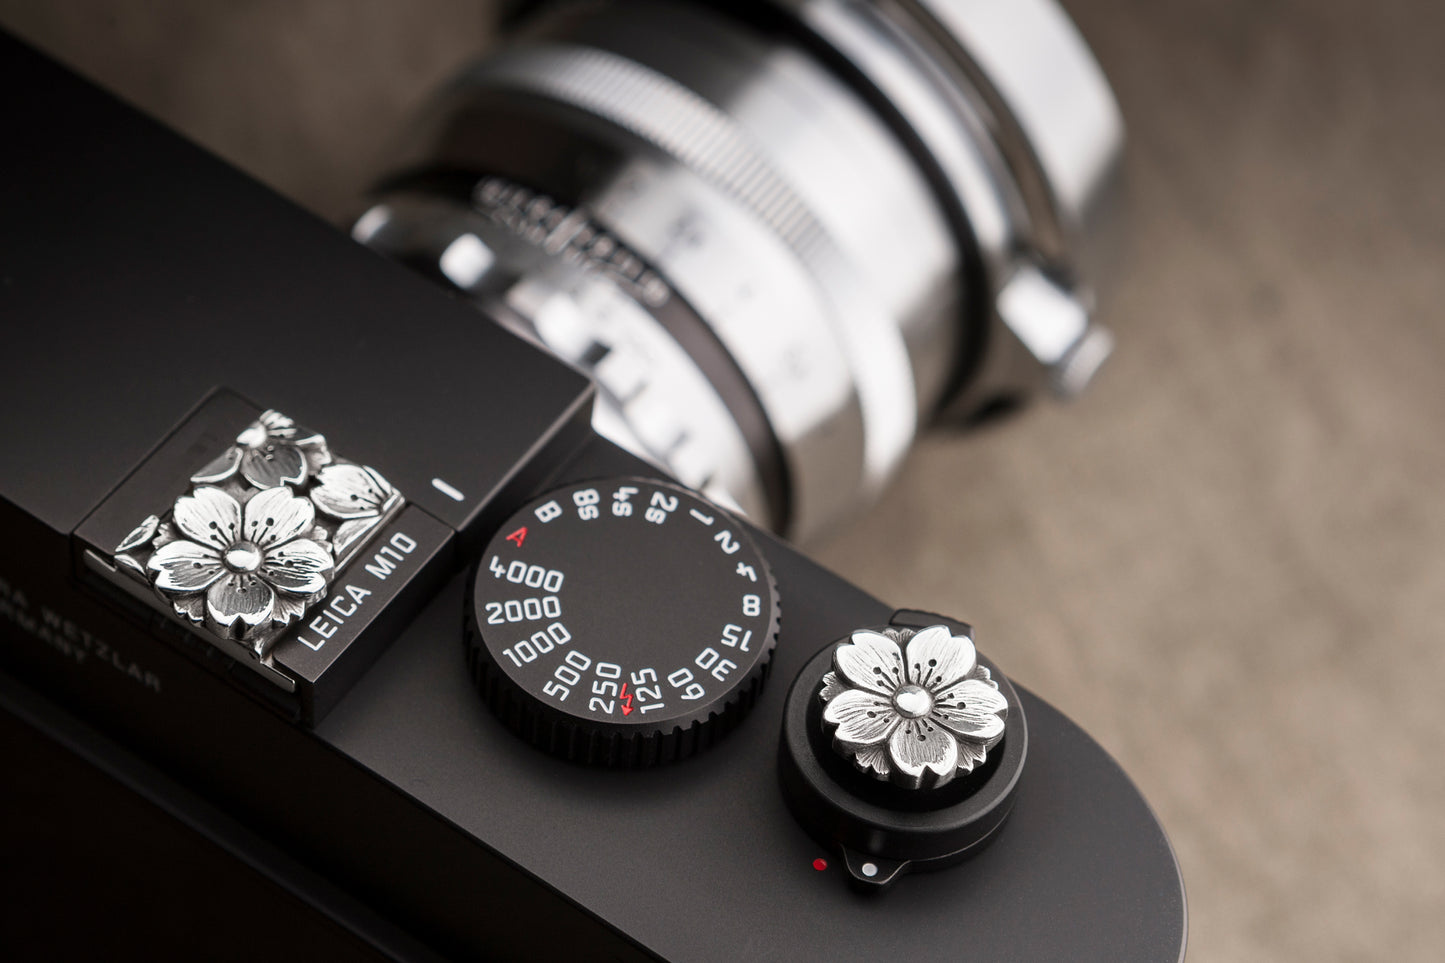 Sakura Camera Soft Release Button -Floral emblems of Japan-